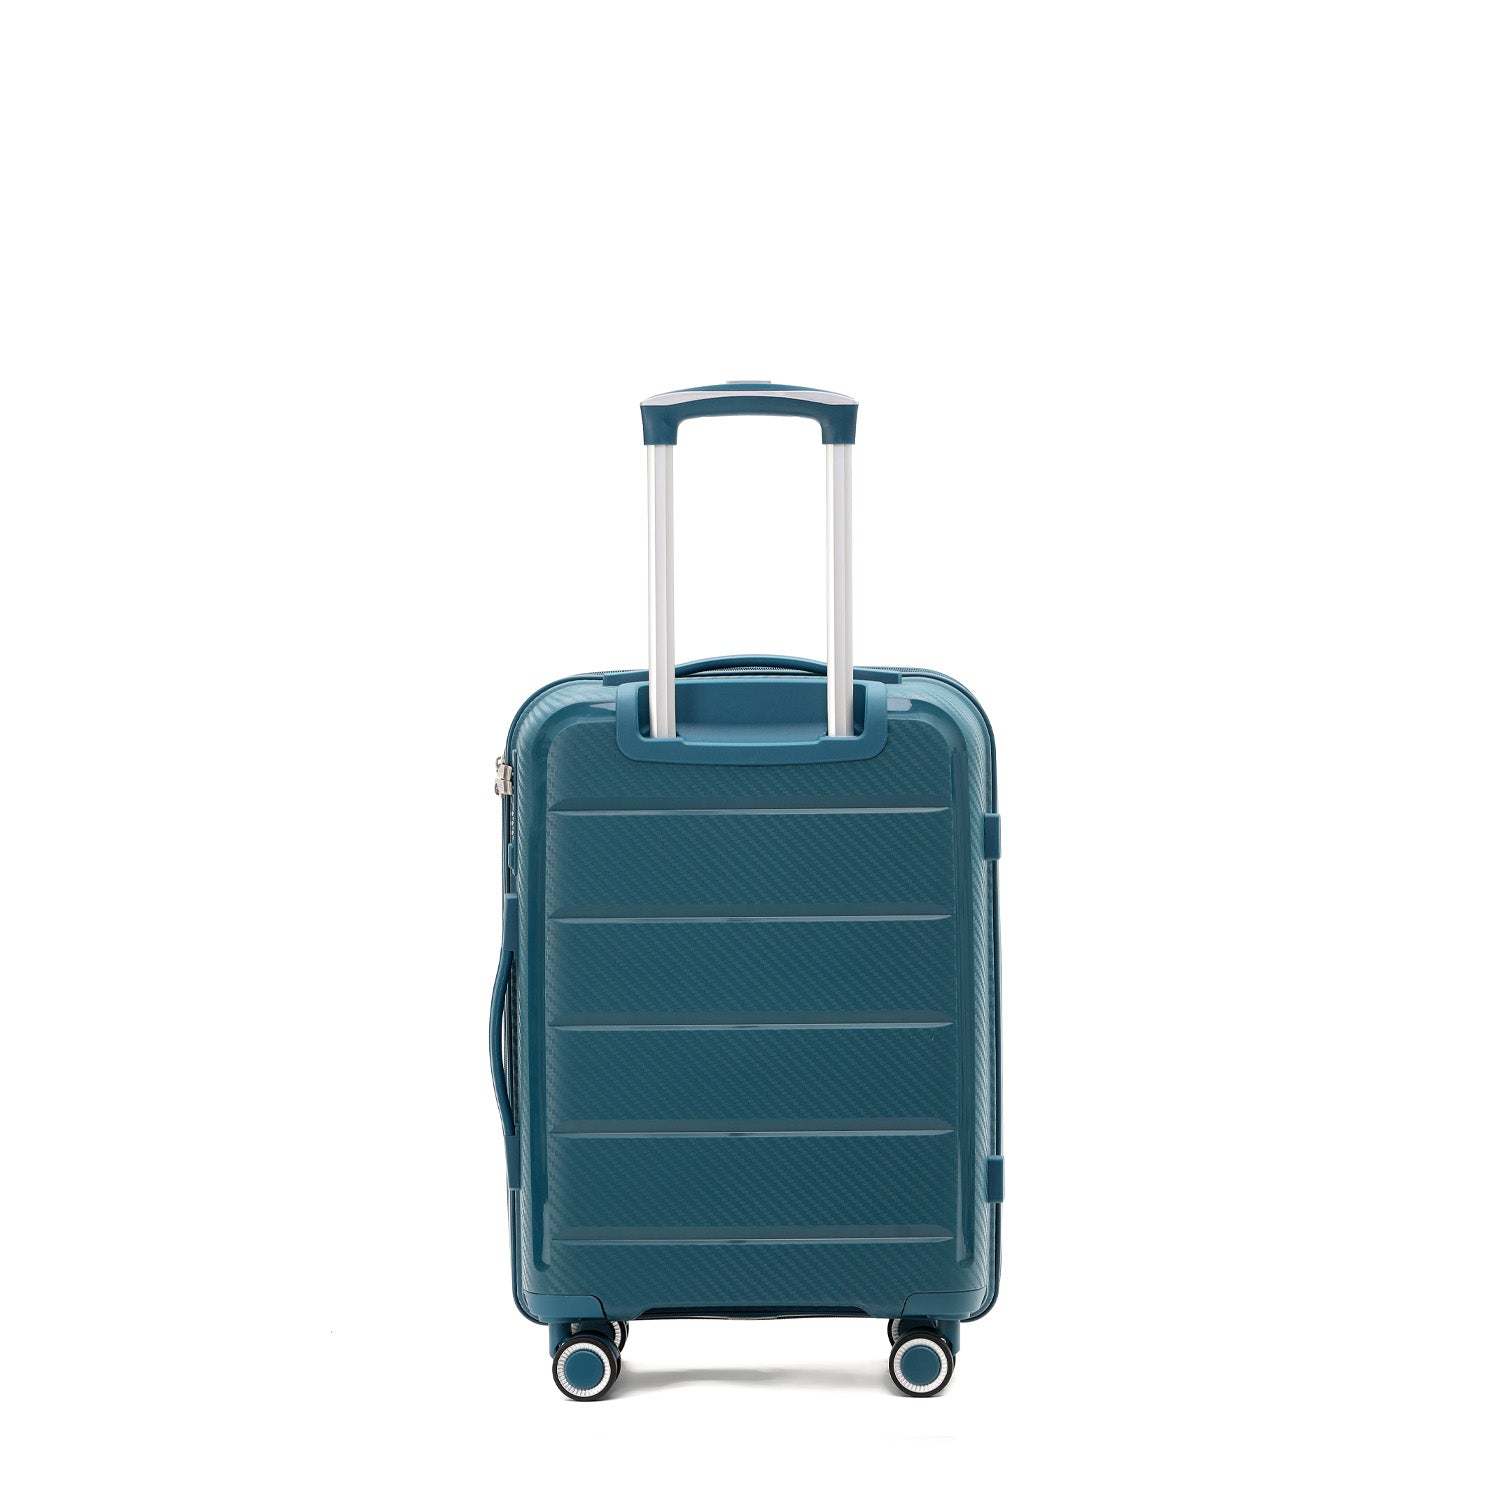 Paklite - PA7350 Set of 3 Suitcases - Blue-17